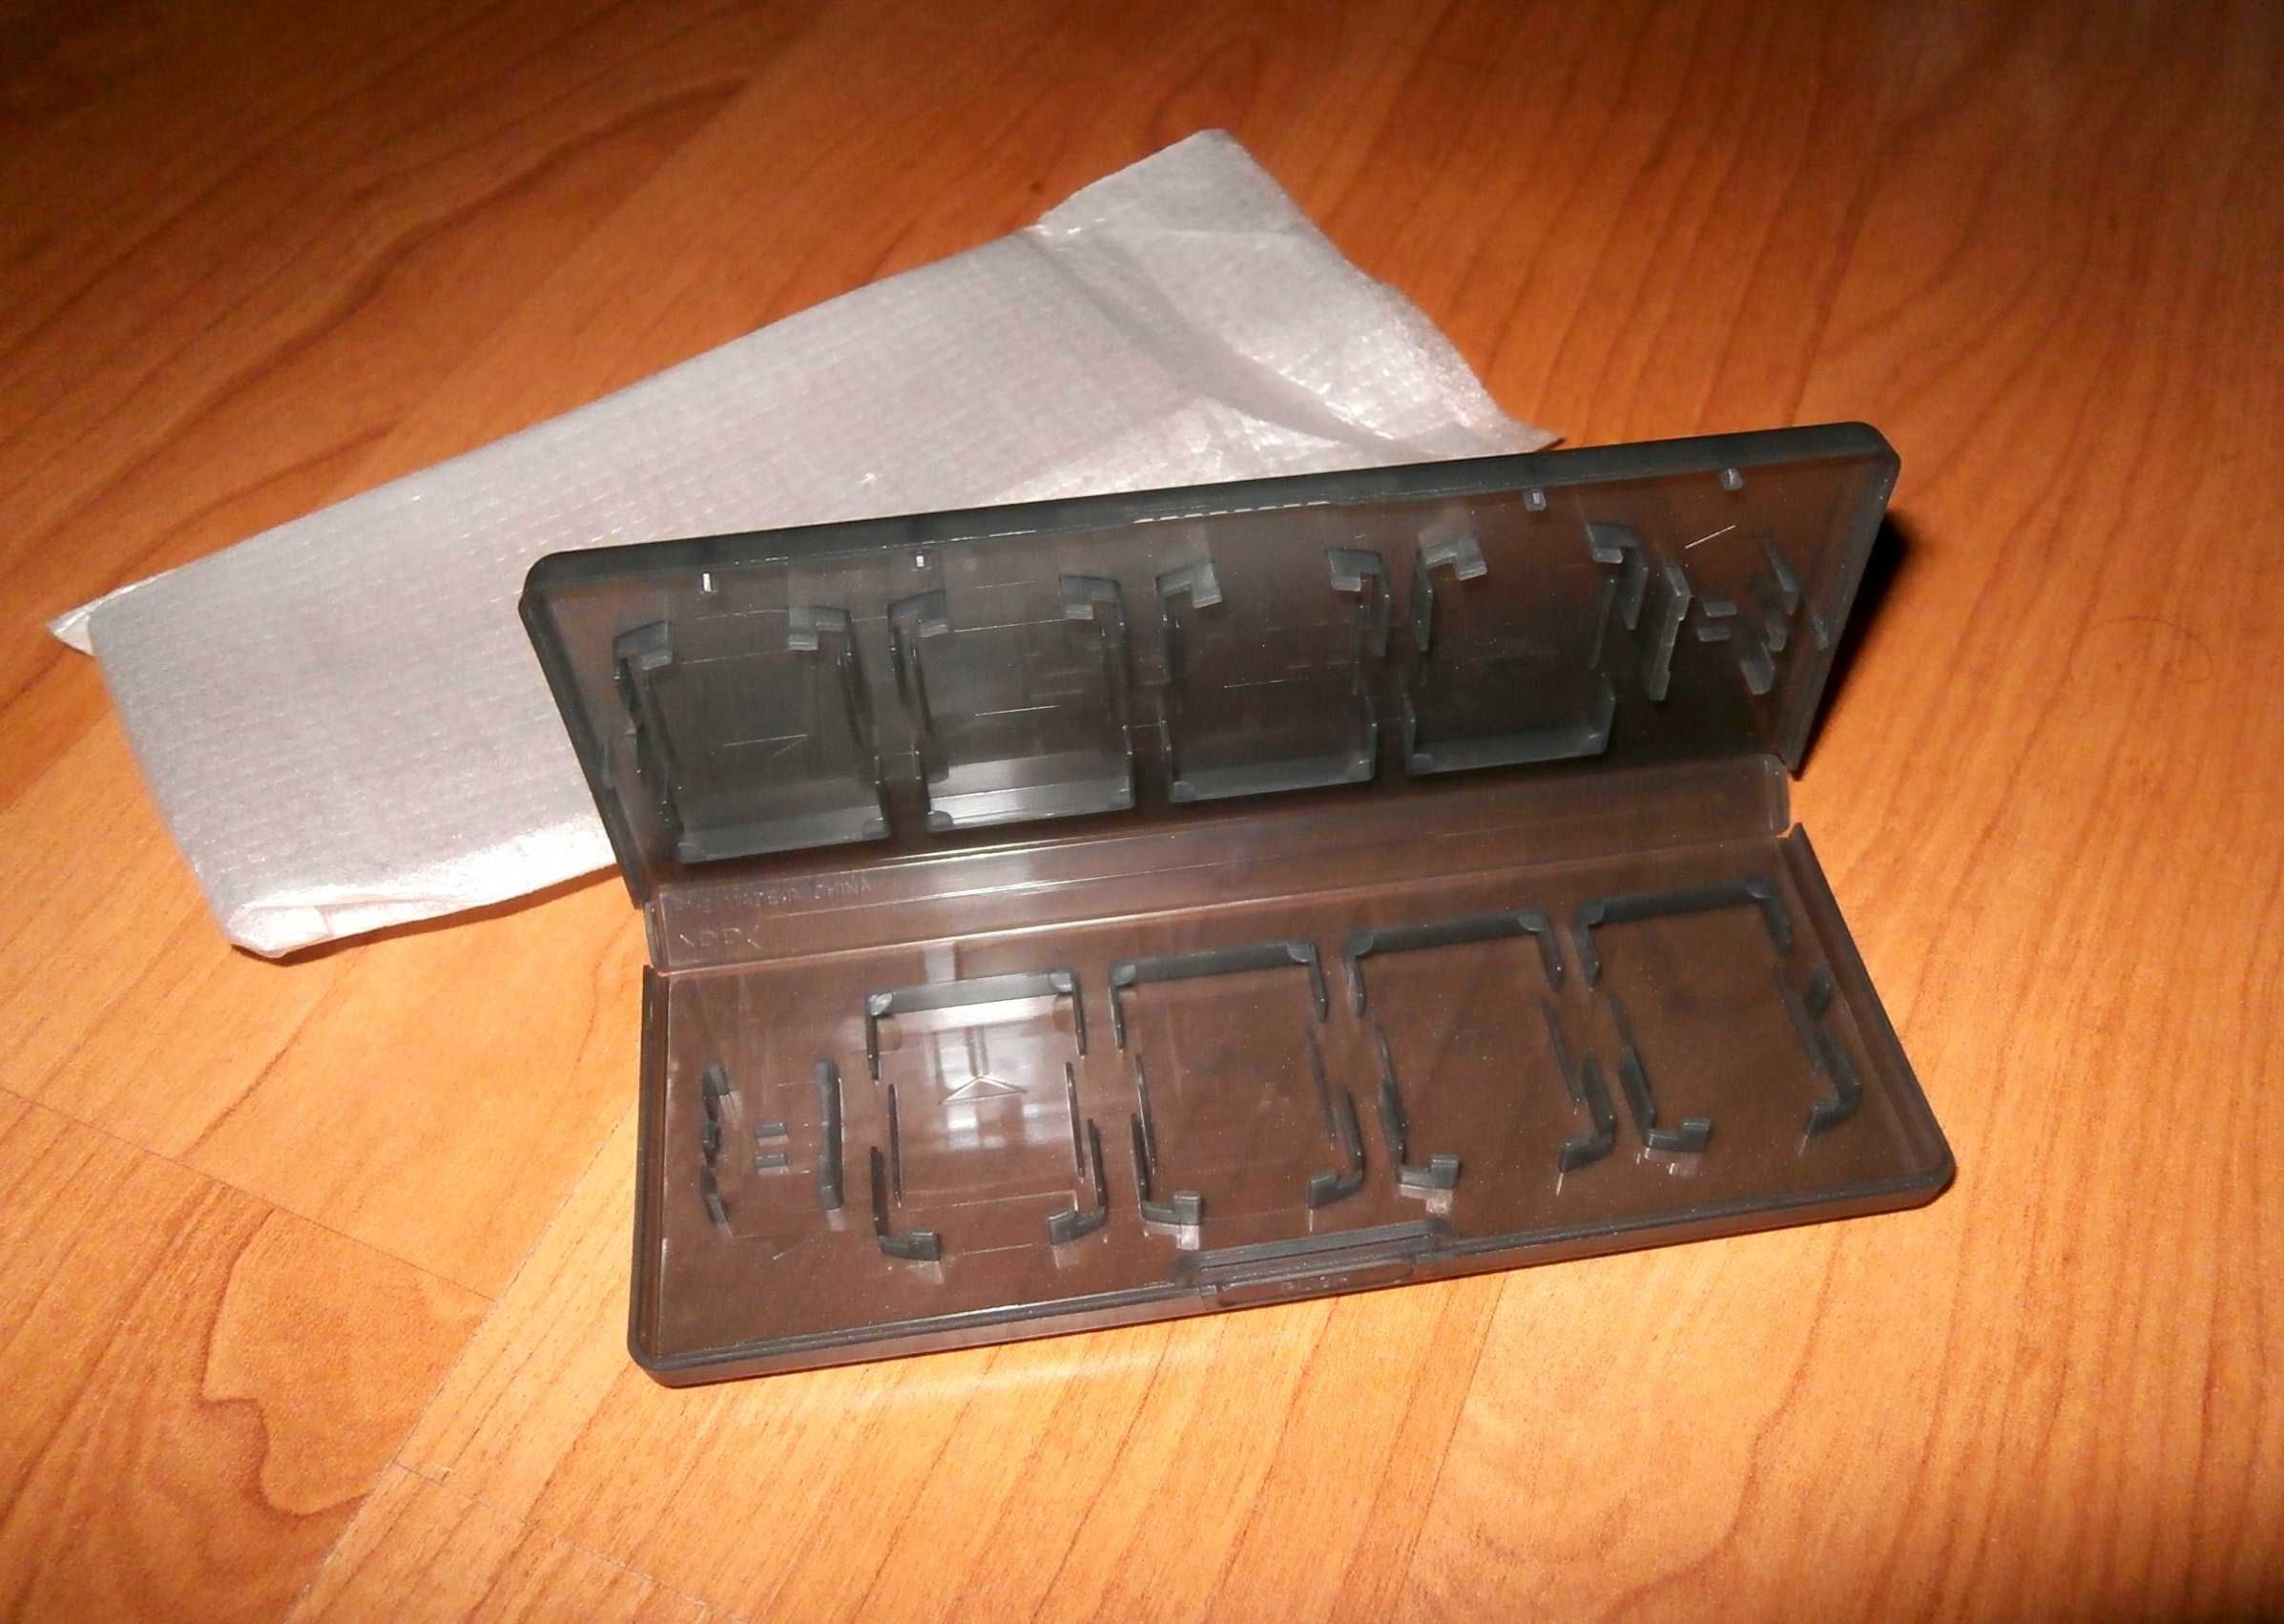 PS Vita - pachet accesorii originale Sony (cutie, laveta, lanyard)